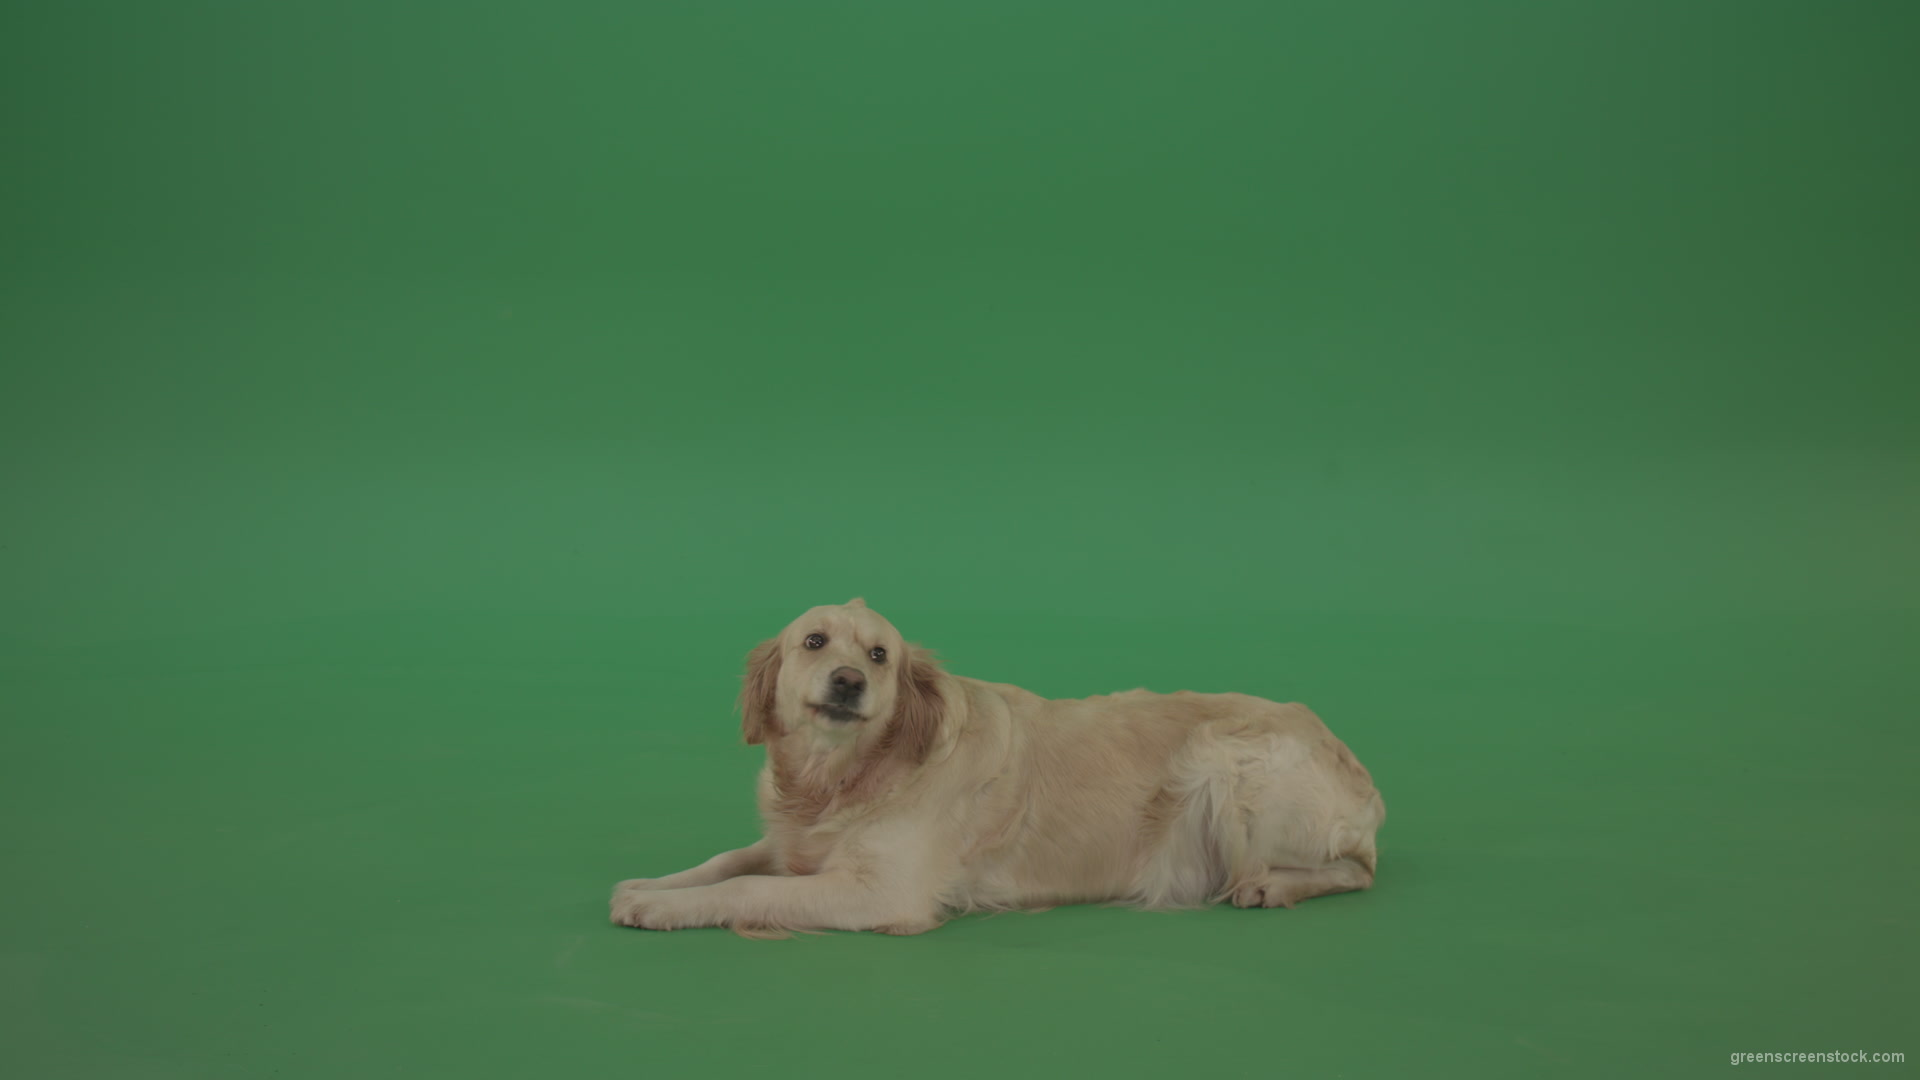 Golden-Retriever-Gun-Dog-Bird-Dog-lying-green-floor-isolated-on-green-screen_005 Green Screen Stock